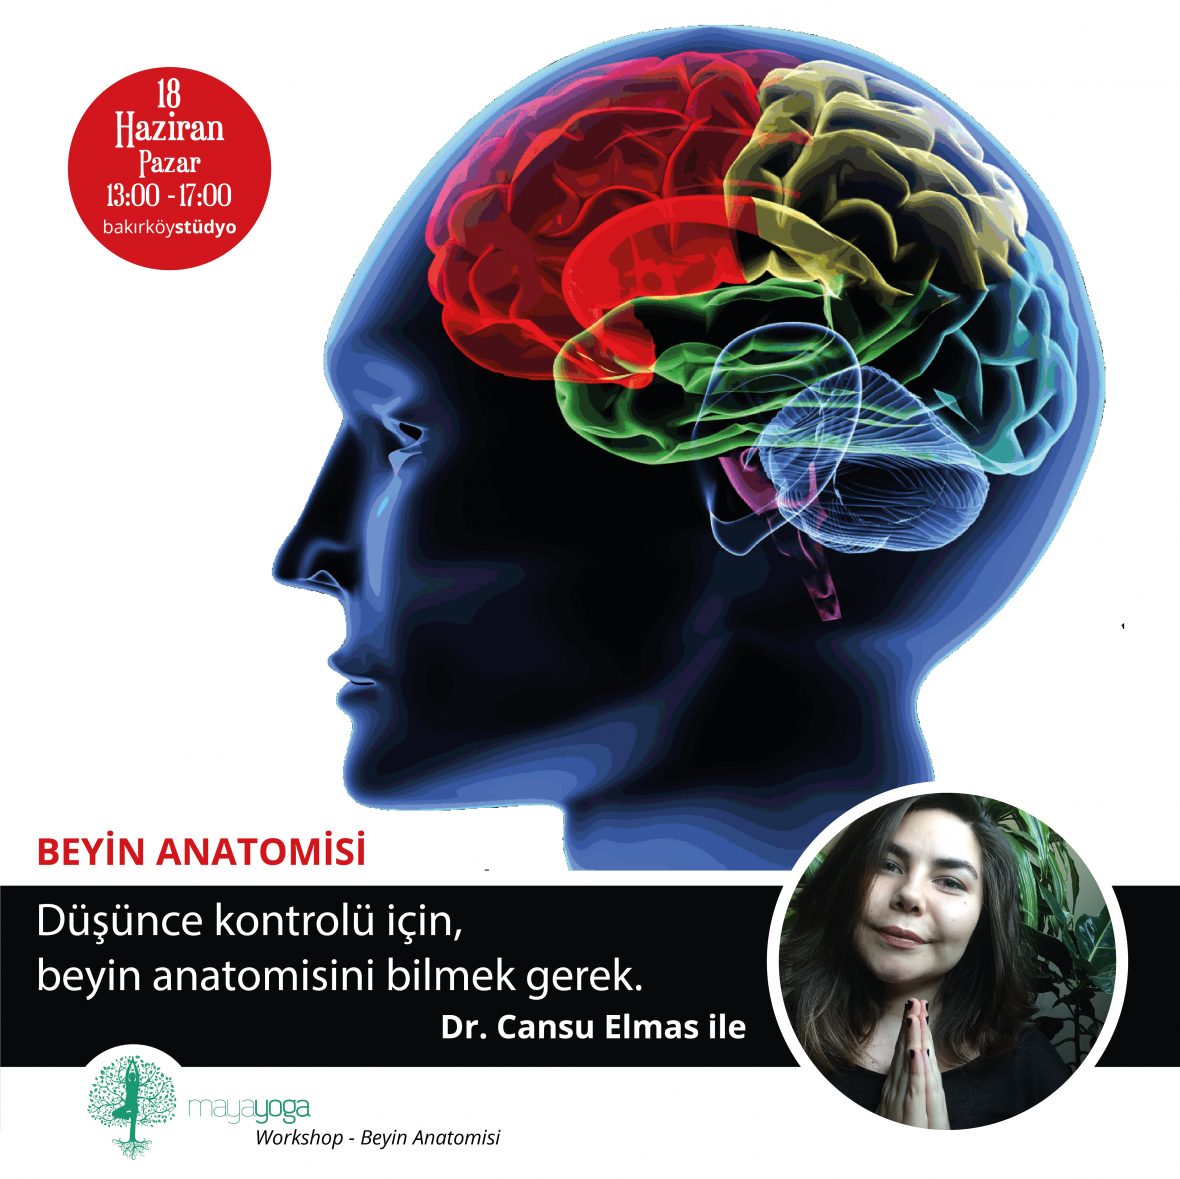 Dr. Cansu Elmas ile Beyin Anatomisi